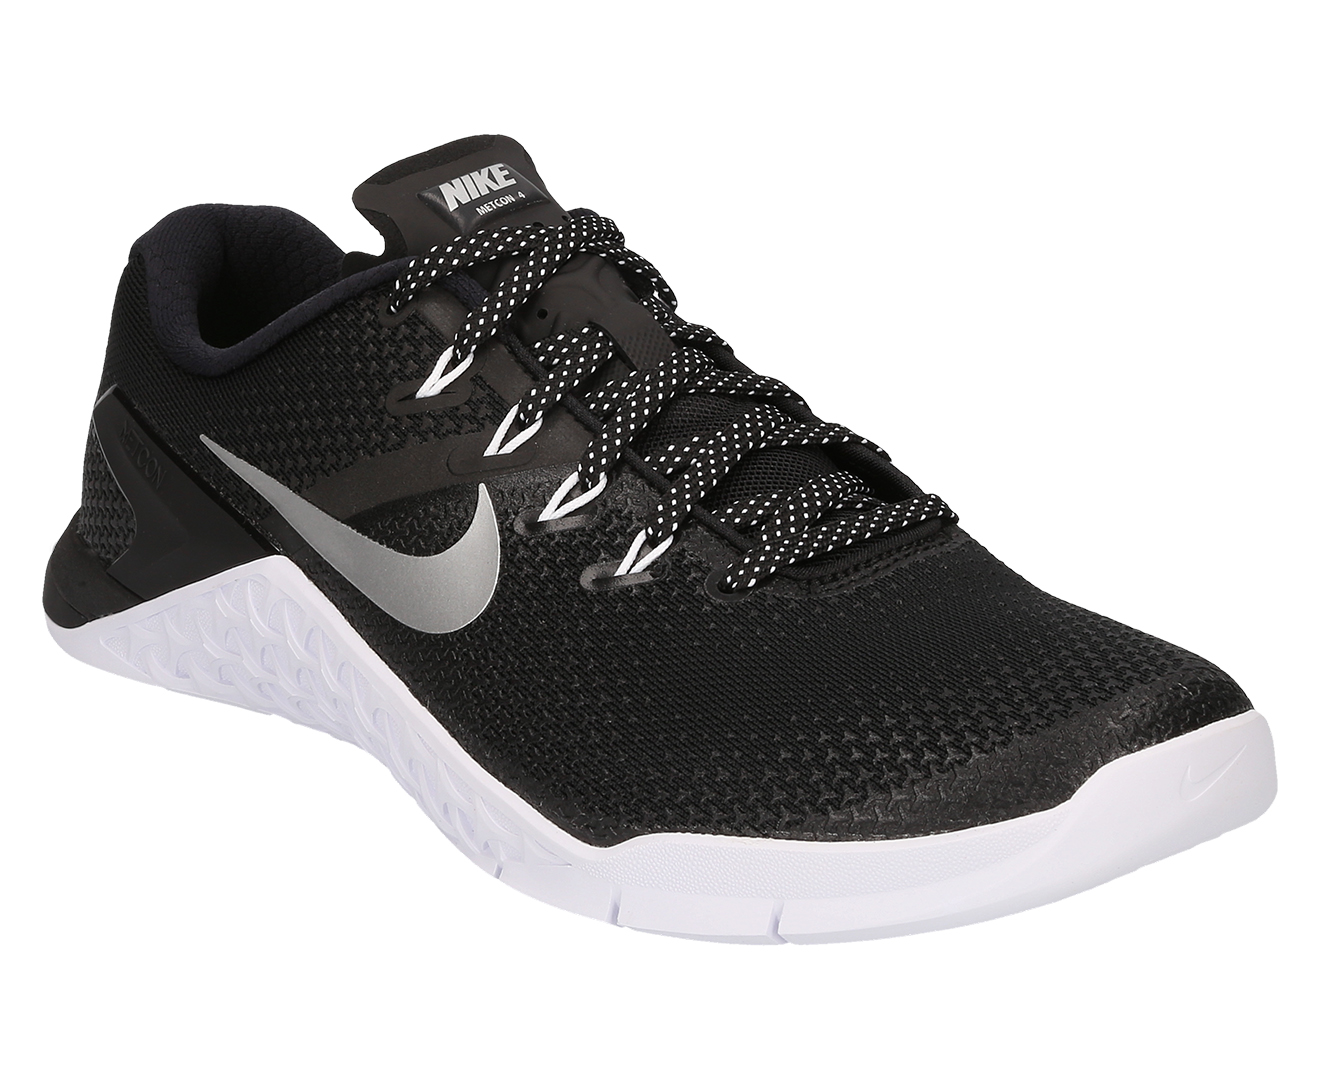 Nike Women's Metcon 4 Shoe - Black/Metallic Silver-White | Catch.co.nz